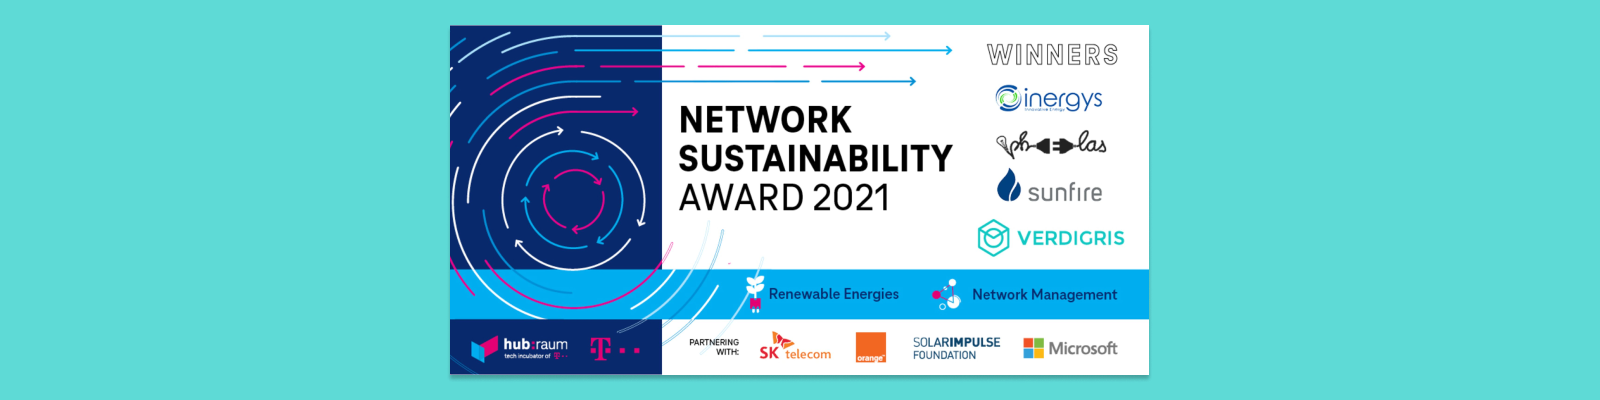 Verdigris Wins Network Sustainability Award